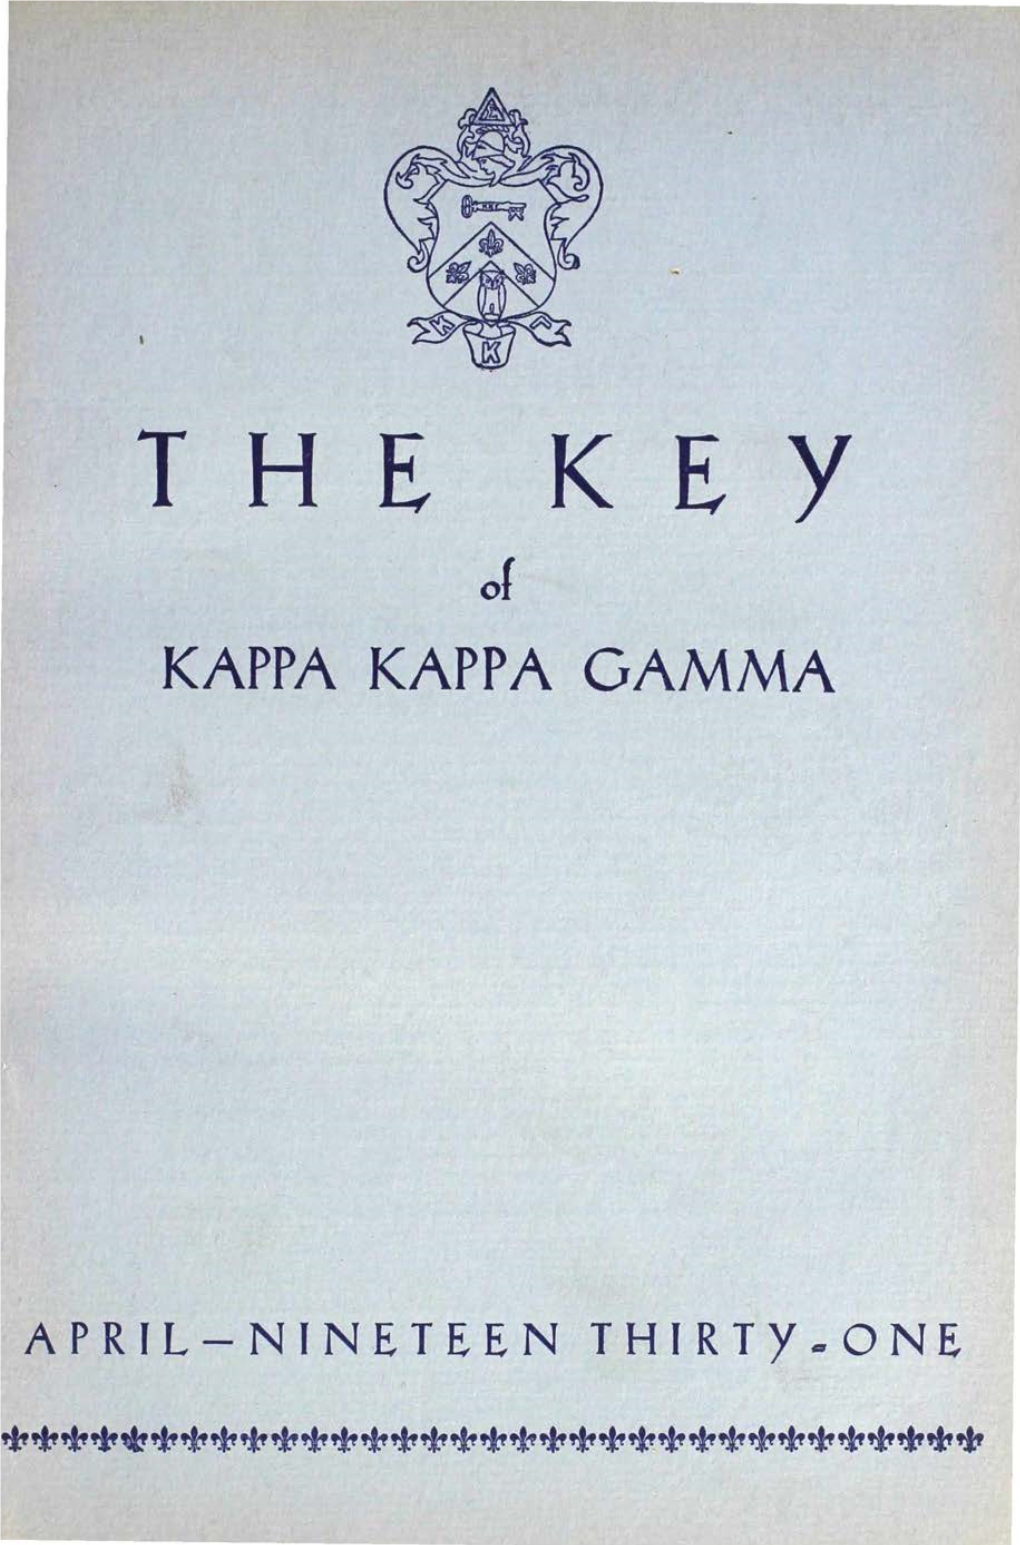 THE KEY VOL 48 NO 2 APR 1931.Pdf